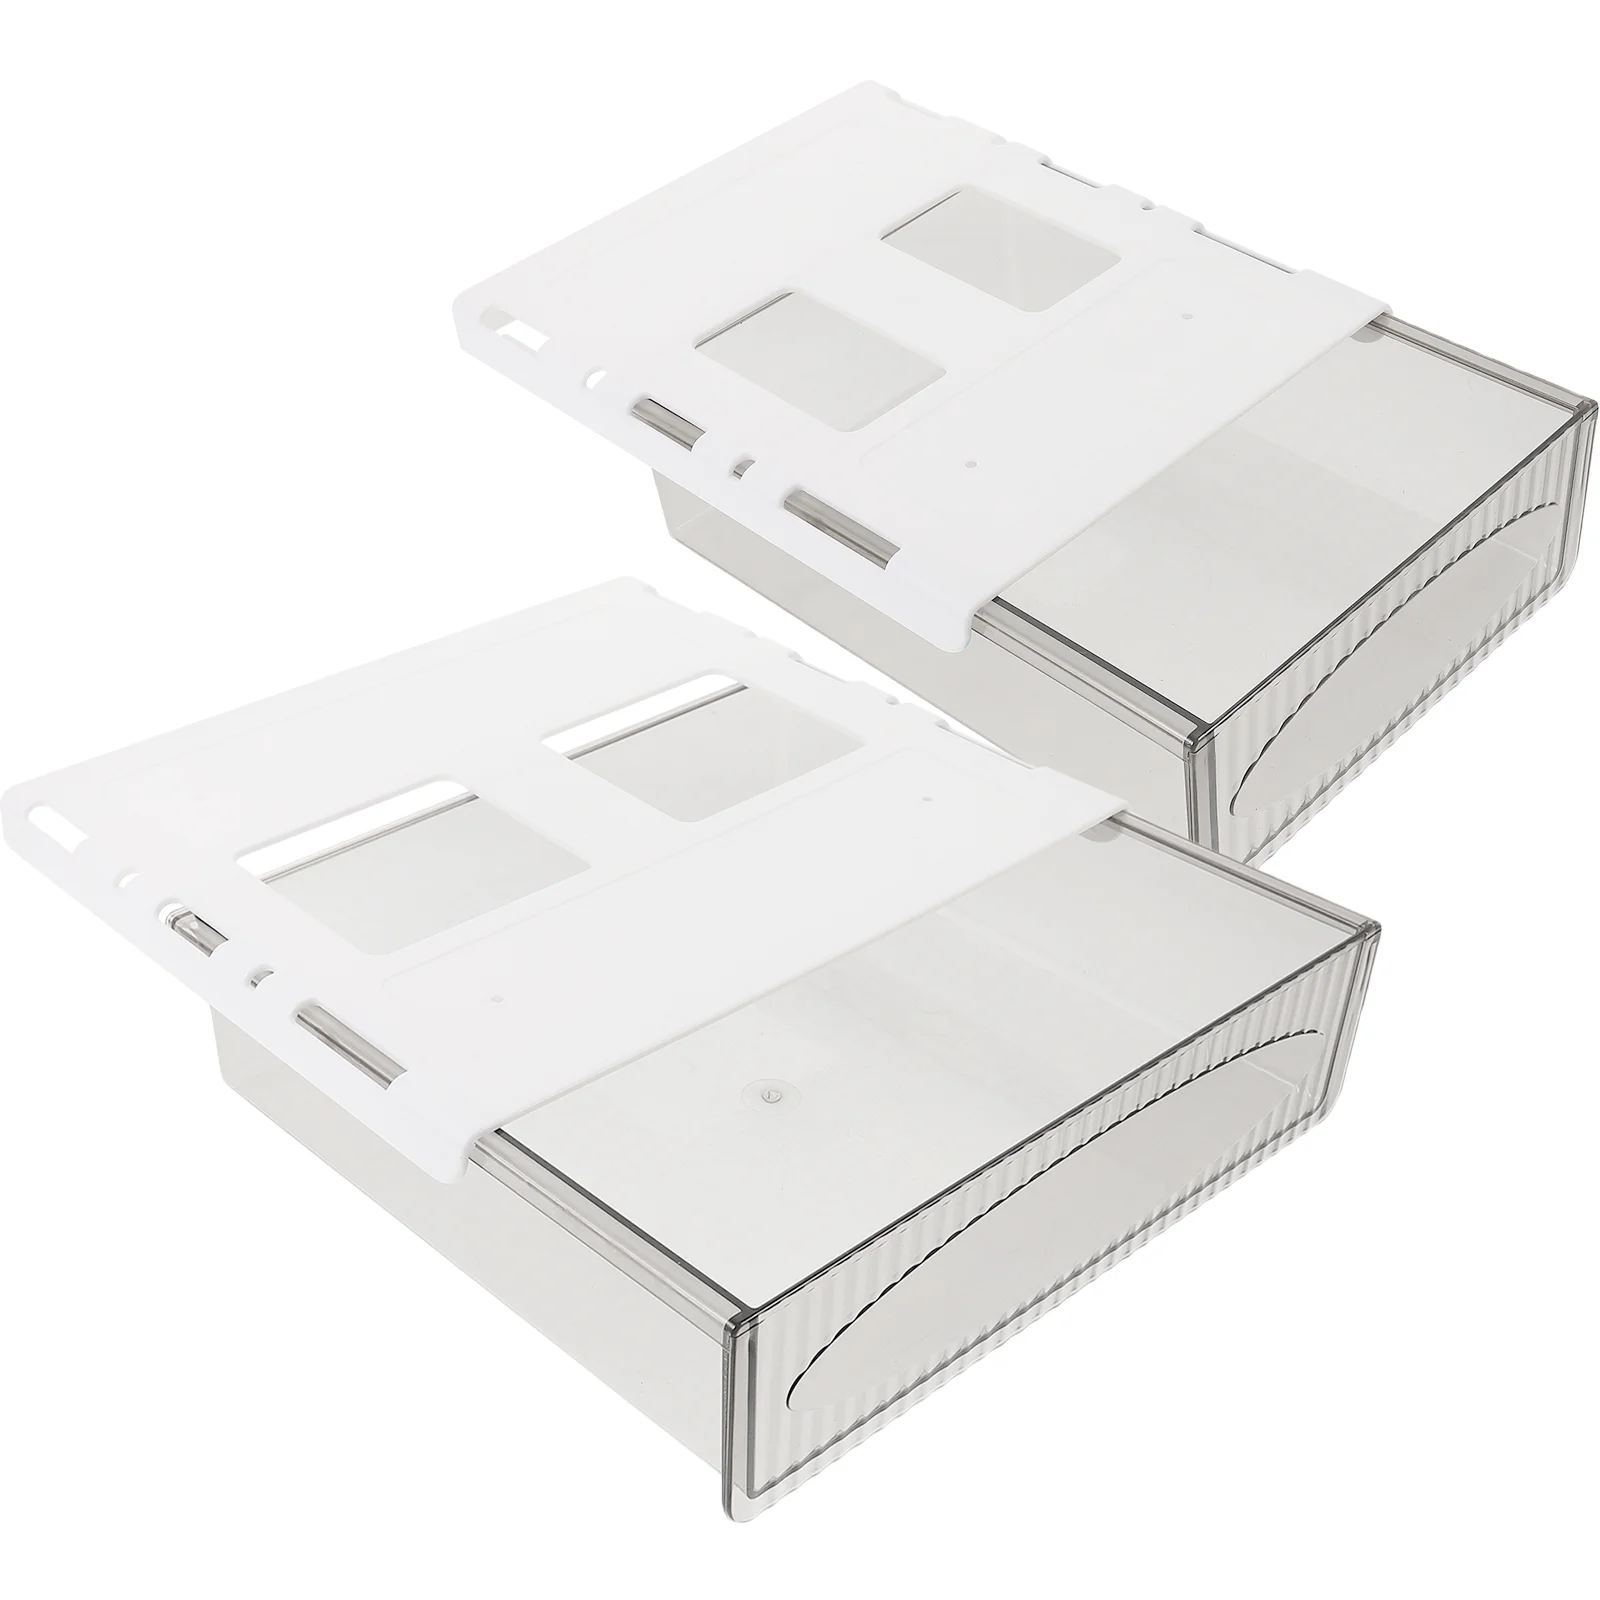 2 Pcs Drawers Desk Storage Organizer Organizers Desktop Box Accessories Plastic Office Organization Shelf